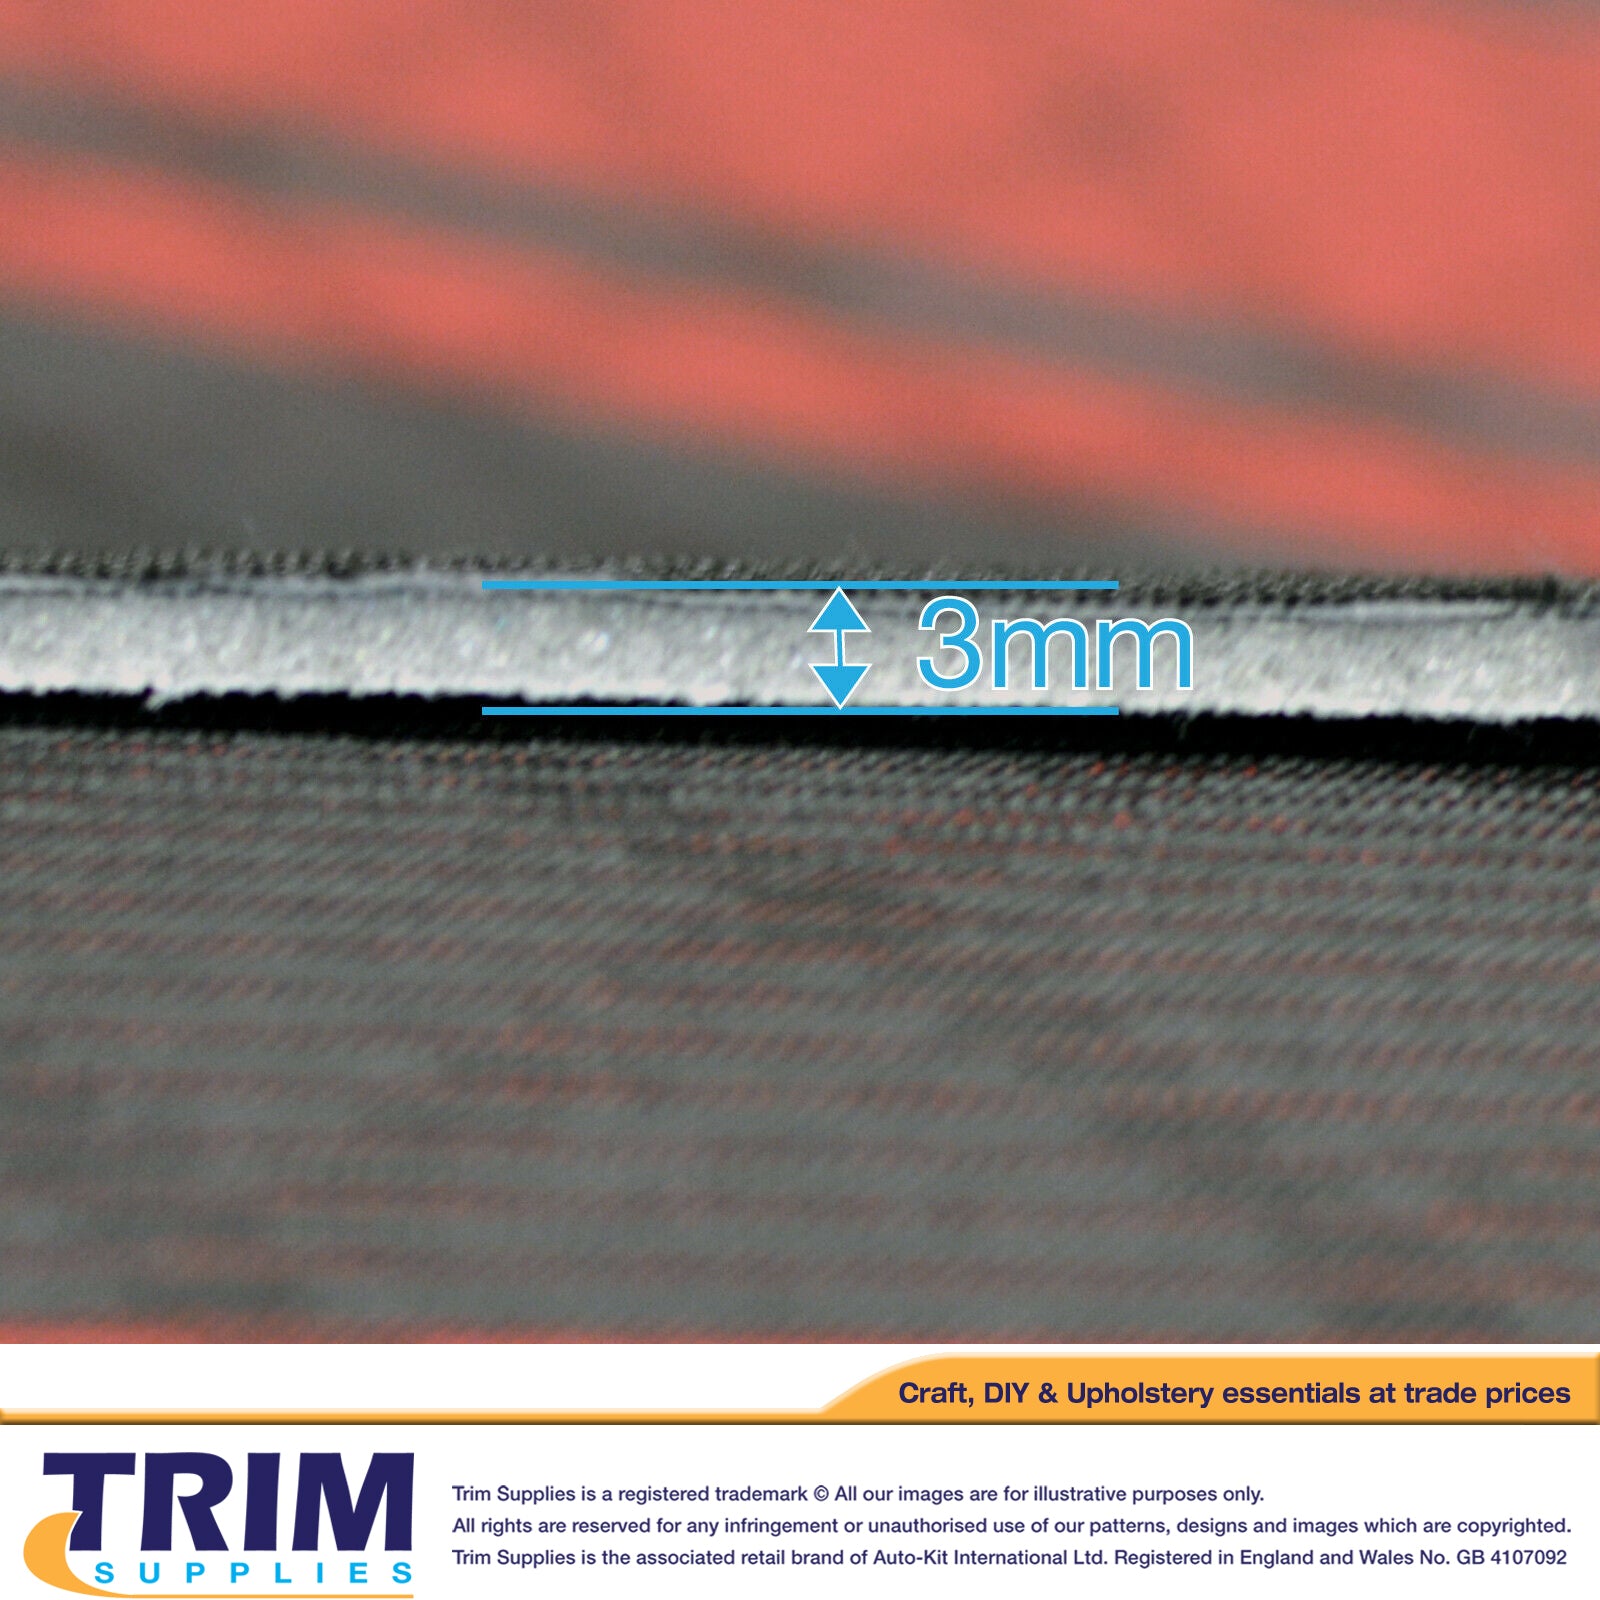 VW Golf GTI TCR Interior Fabric Diamond Striped - £43.00 / Metre